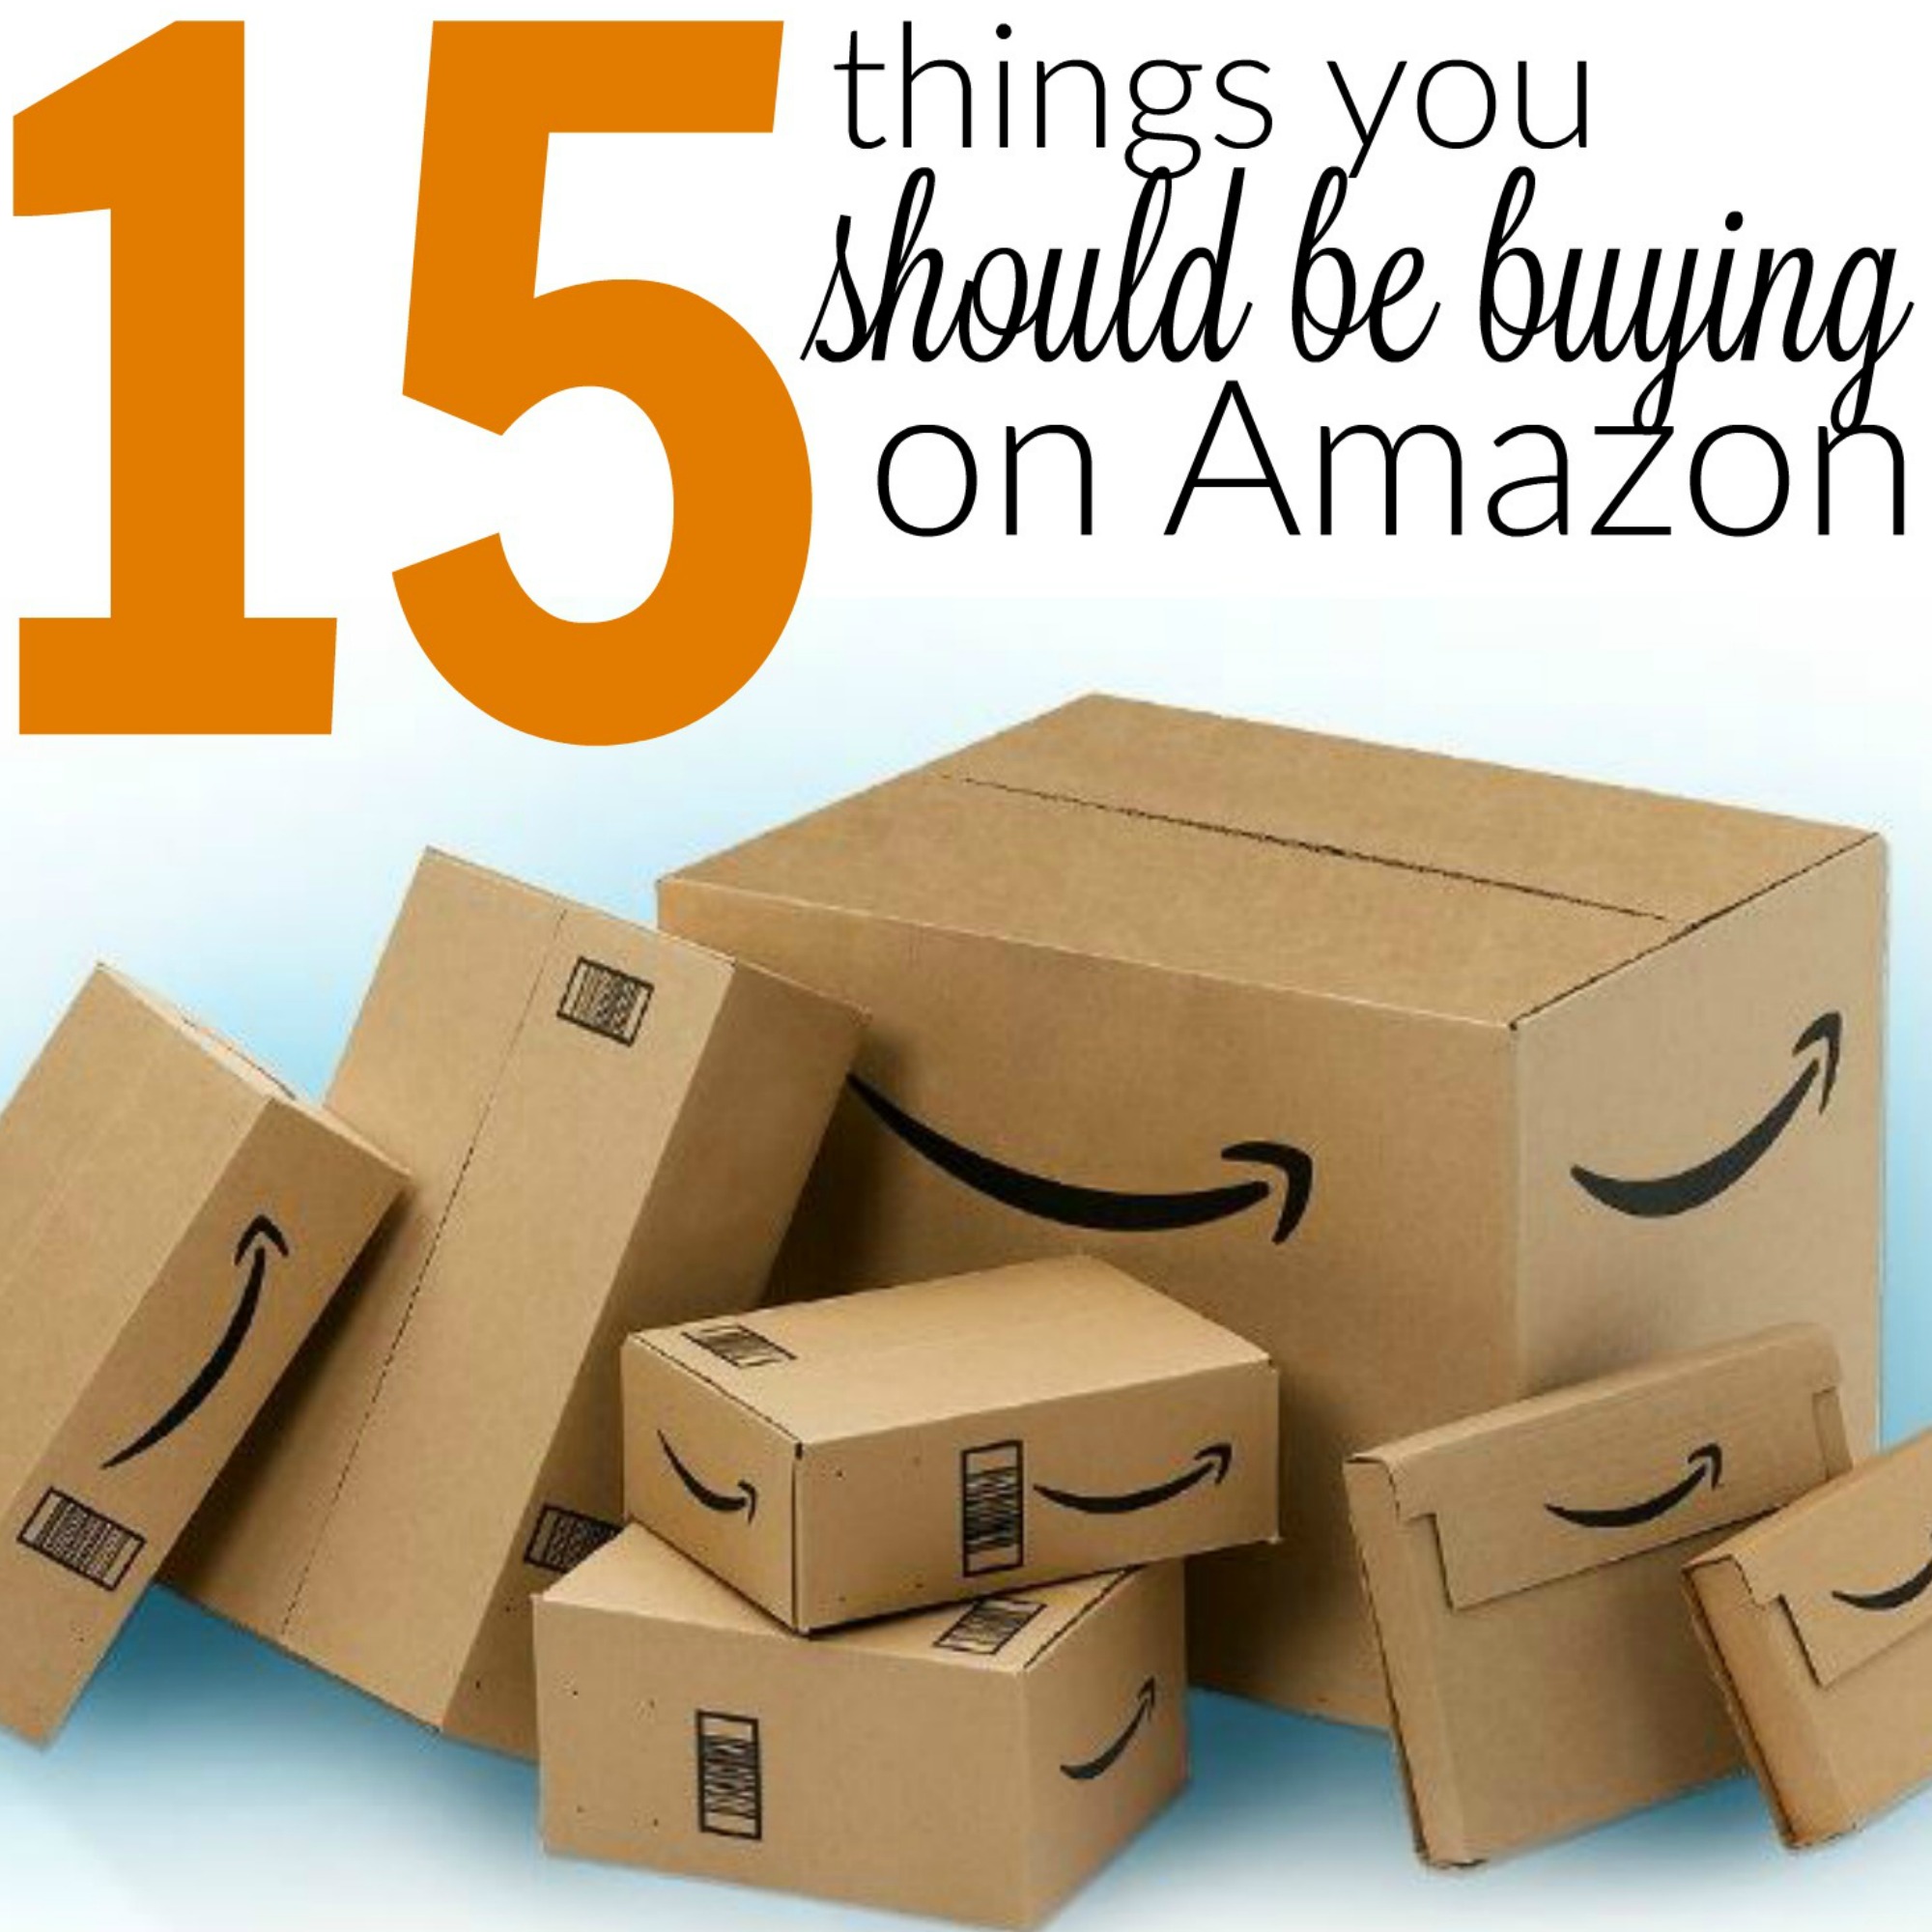 What Should You Buy on Amazon